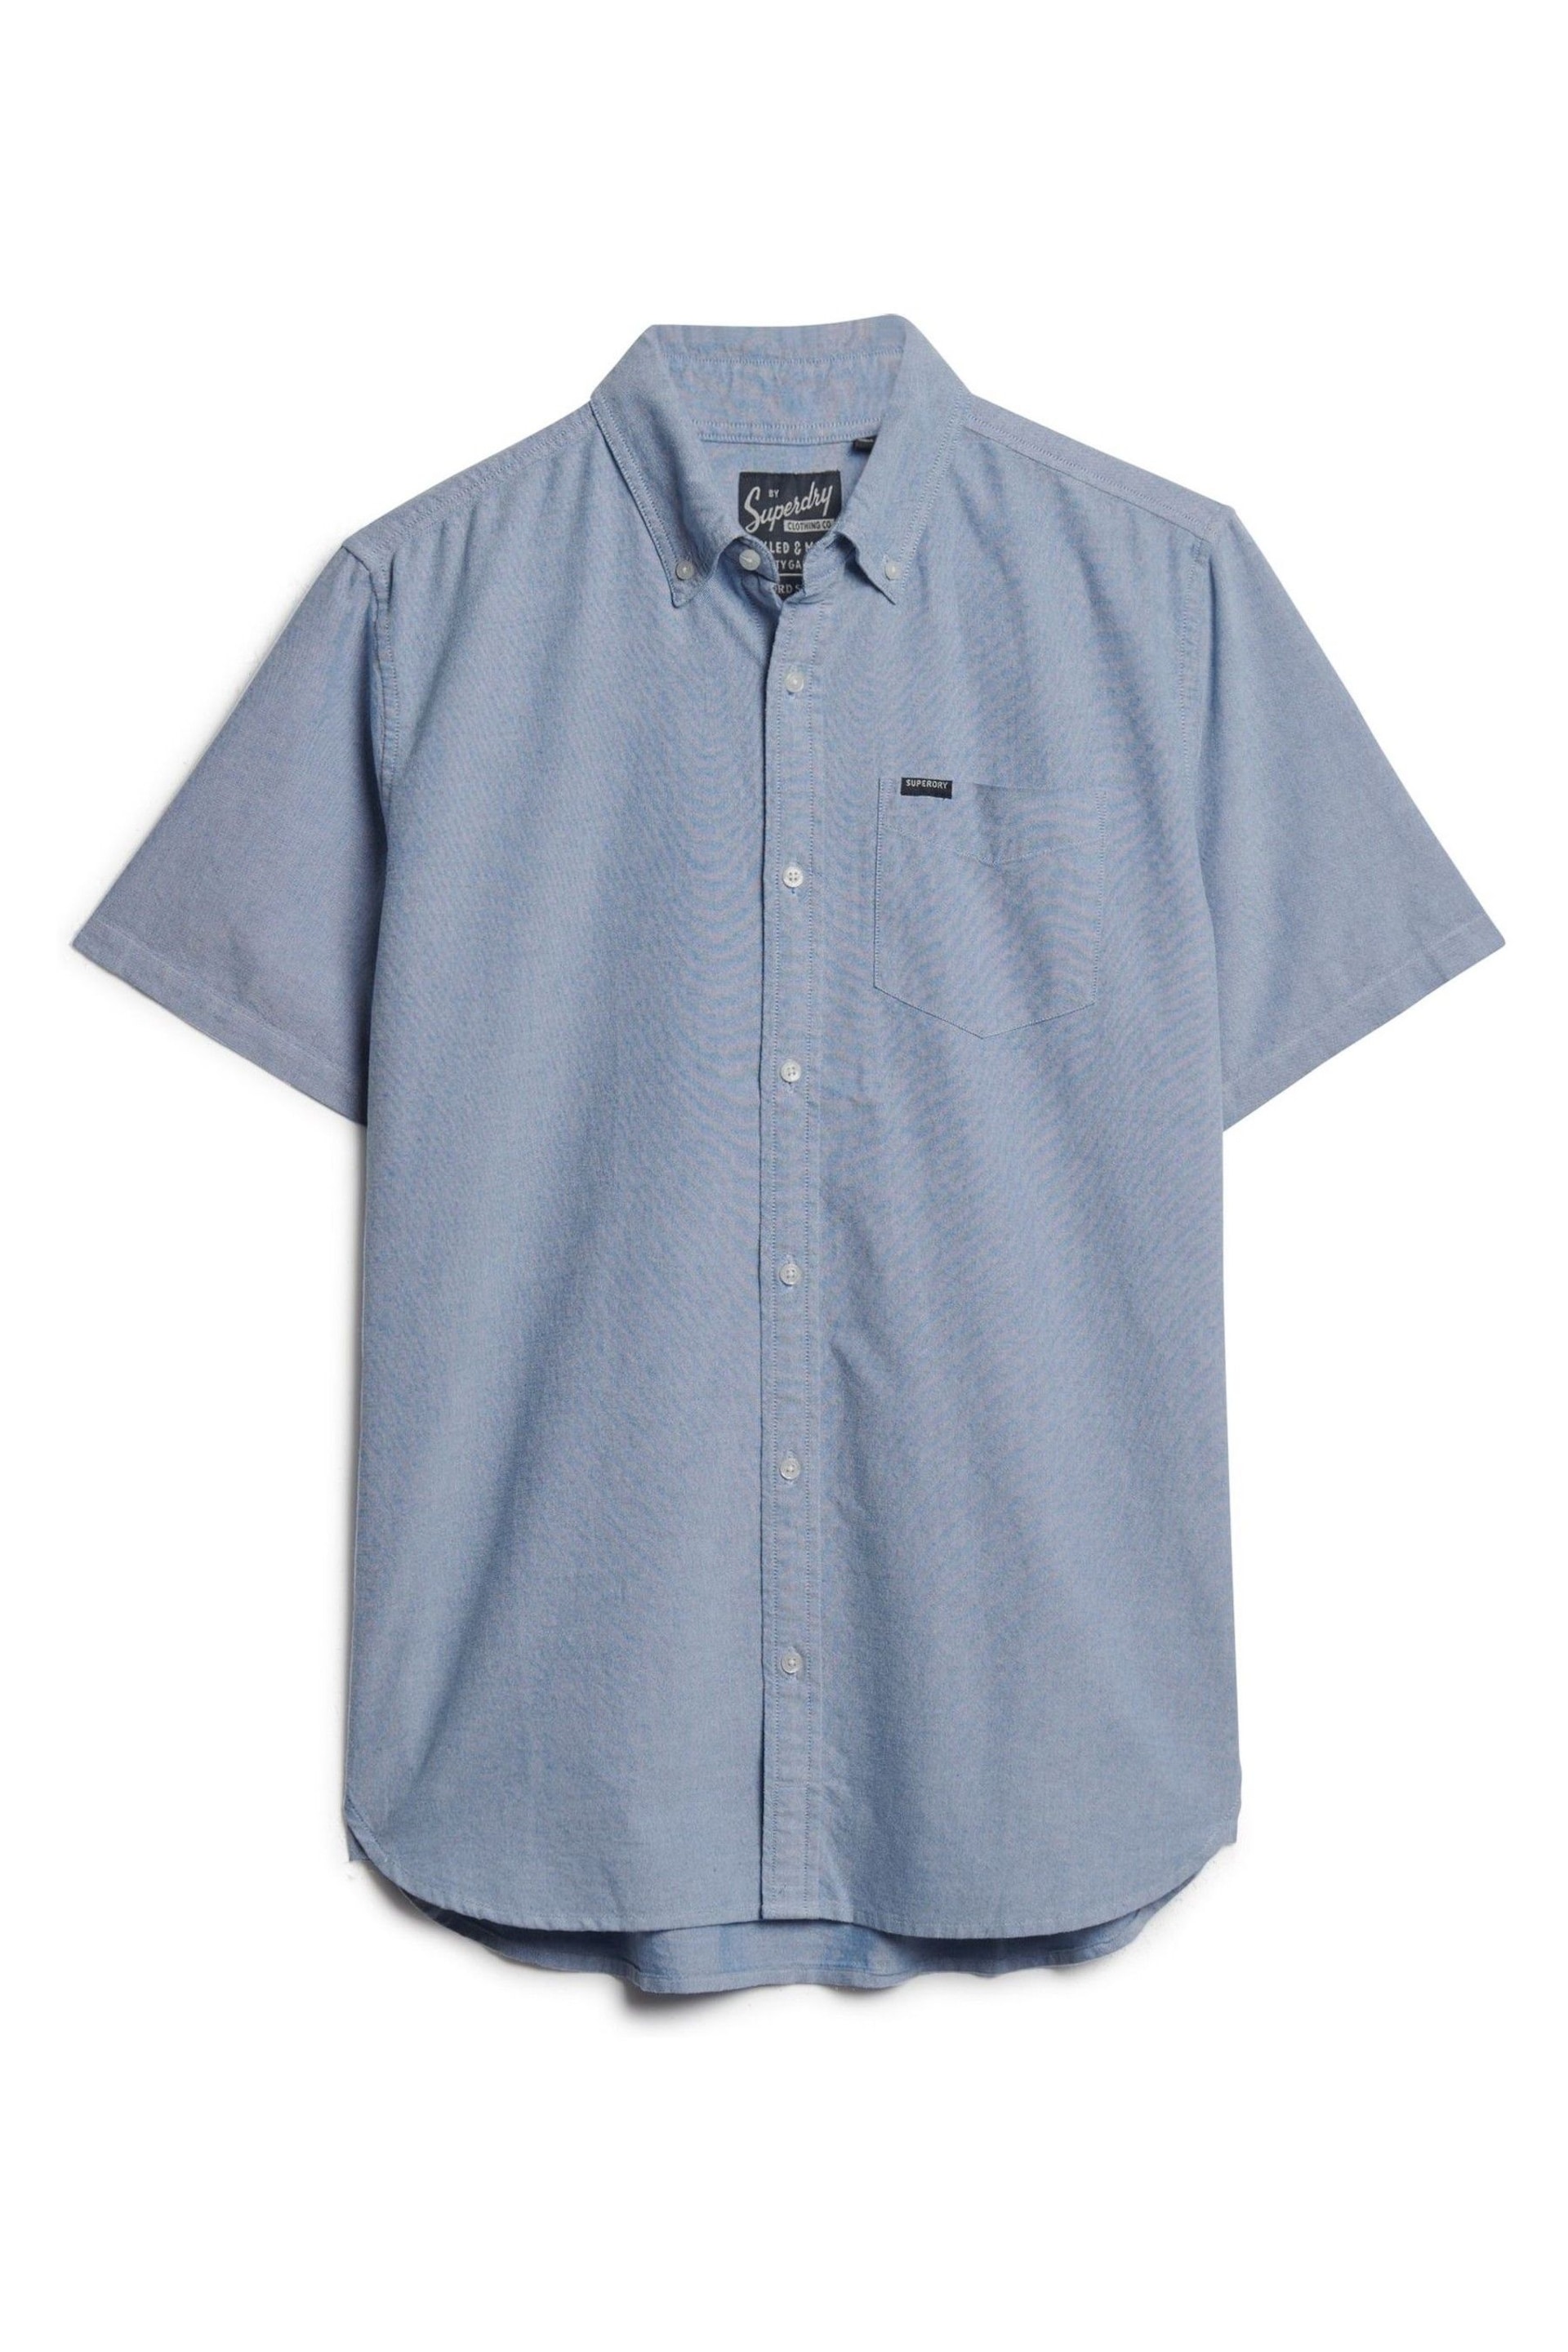 Superdry Blue Oxford Short Sleeve Shirt - Image 4 of 6